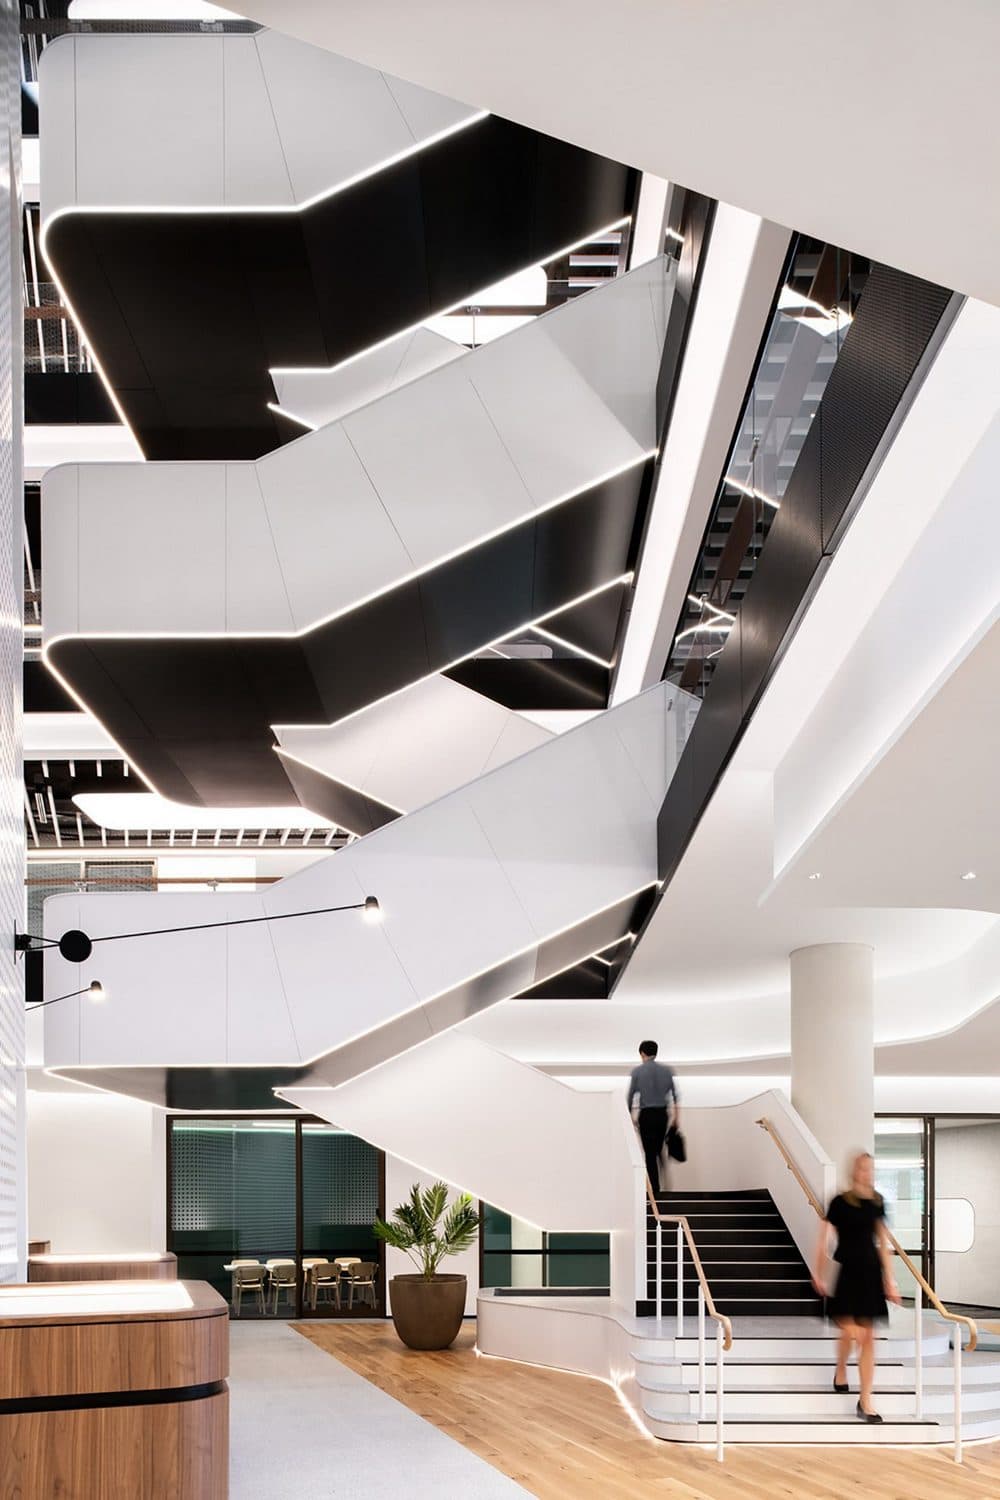 Agile Workplace, Sydney / Cox Architecture